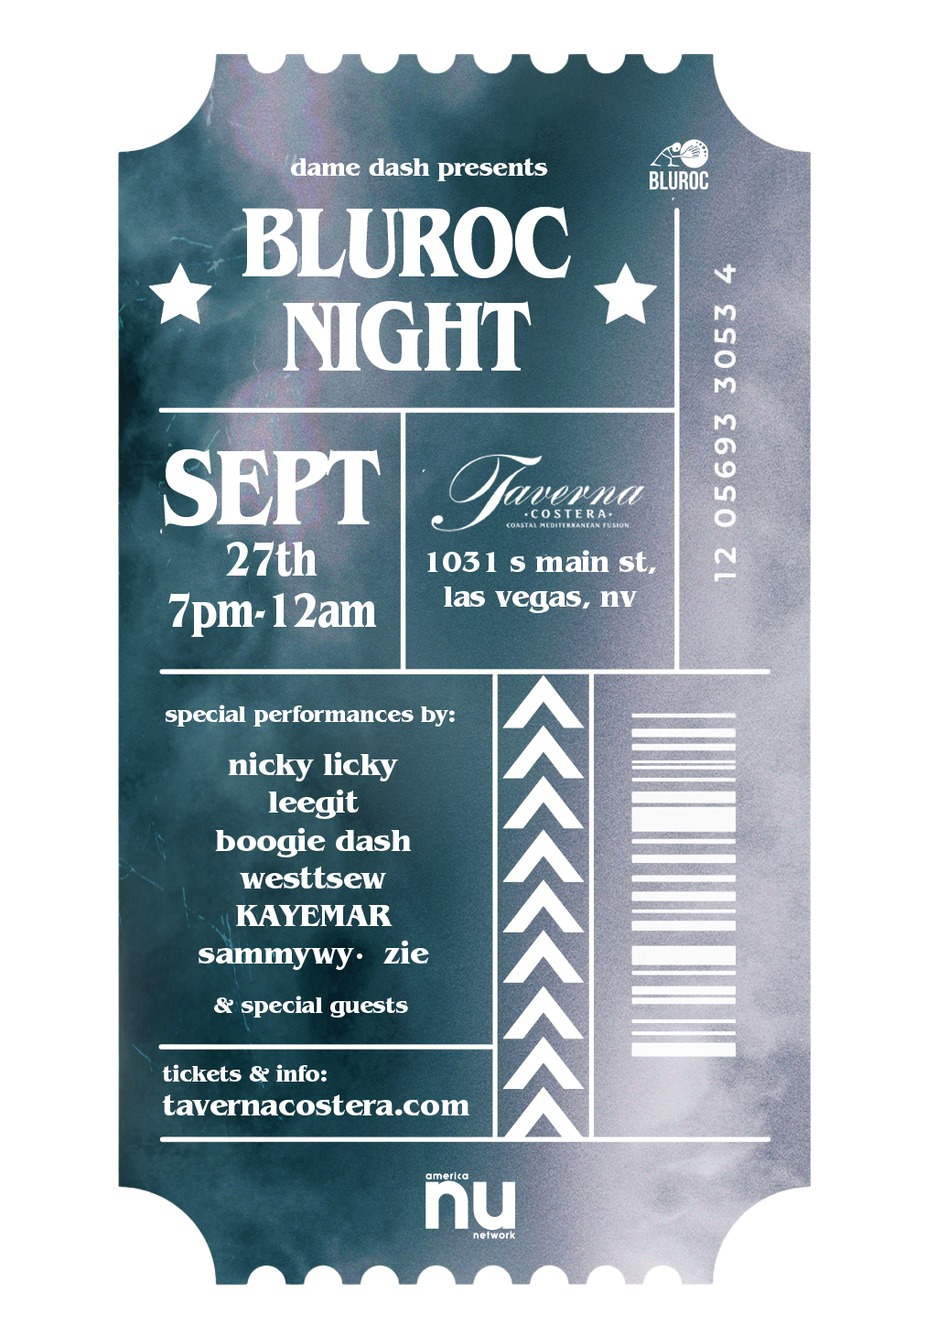 Bluroc Night event photo